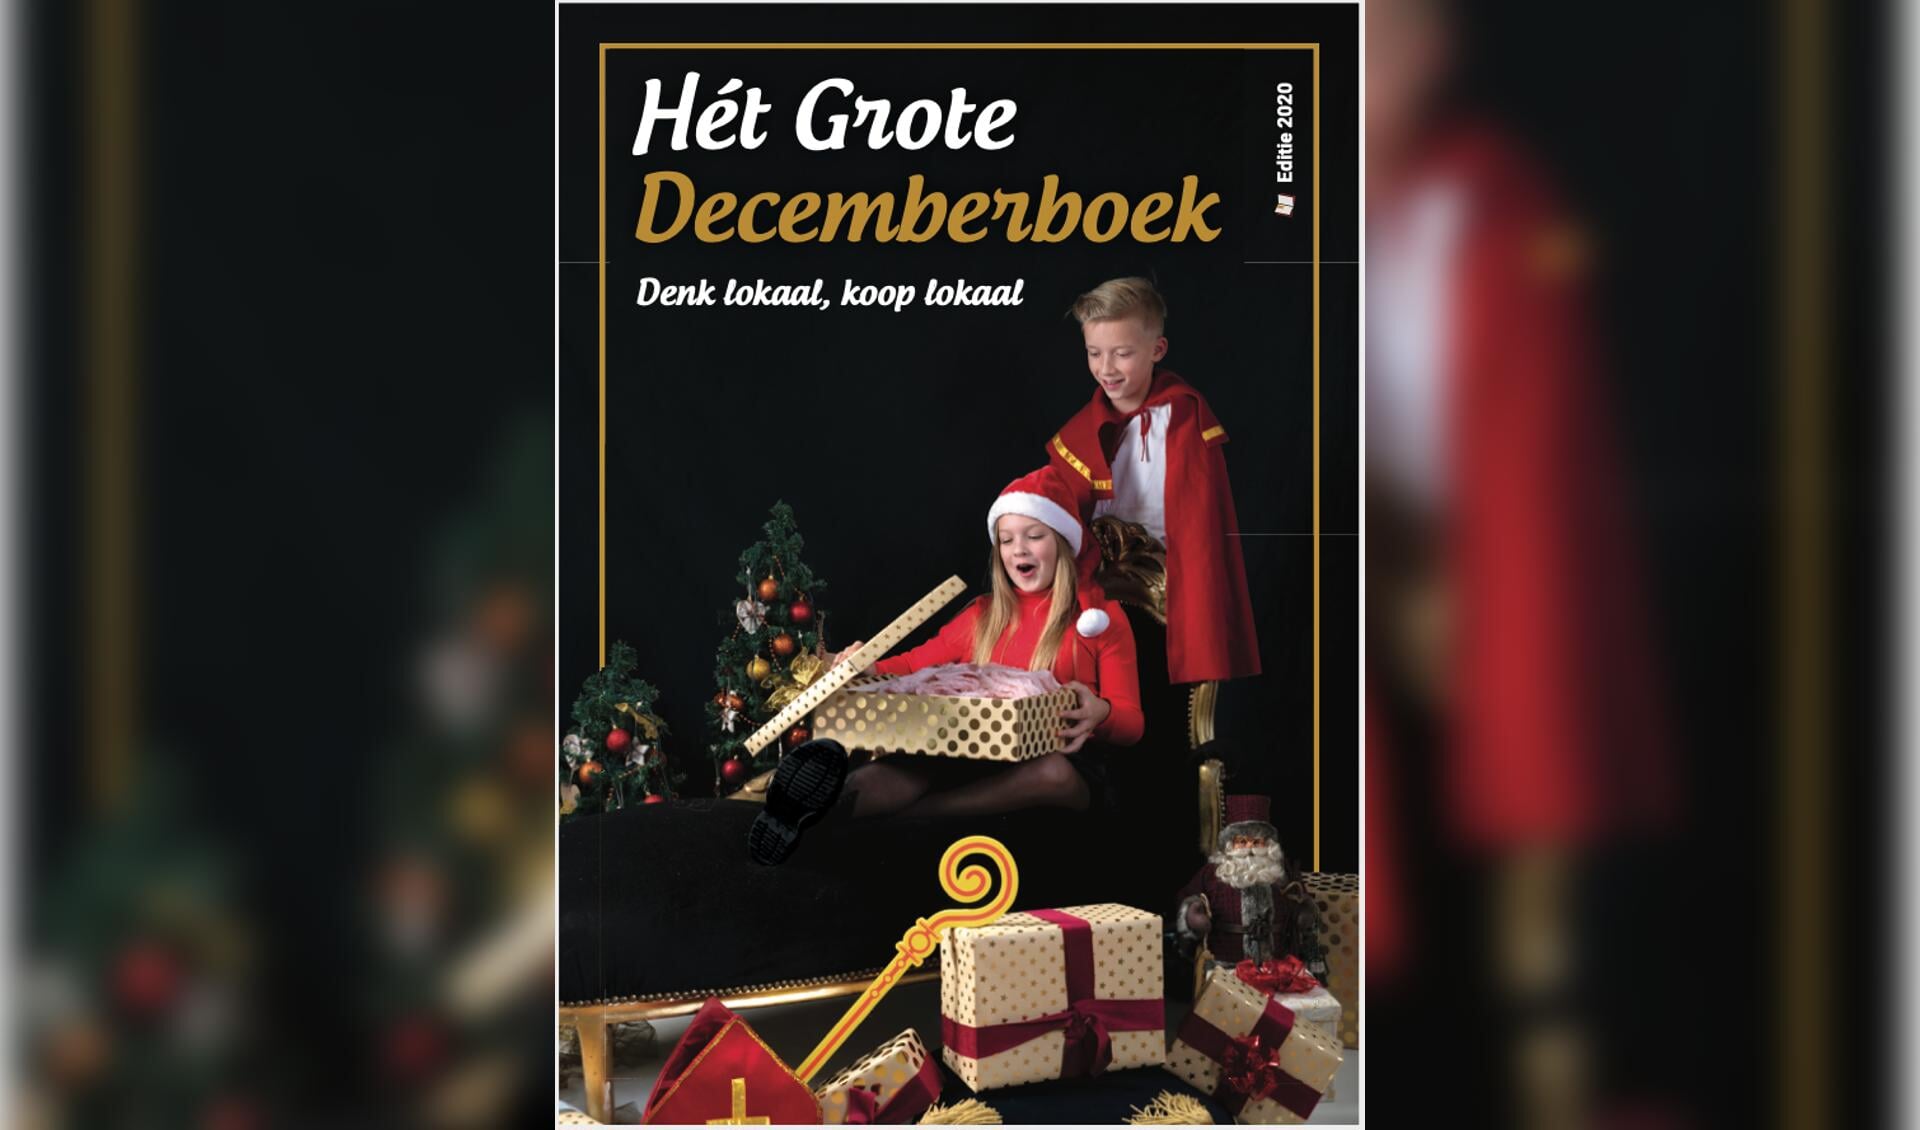 De cover van Hét Grote Decemberboek 2020